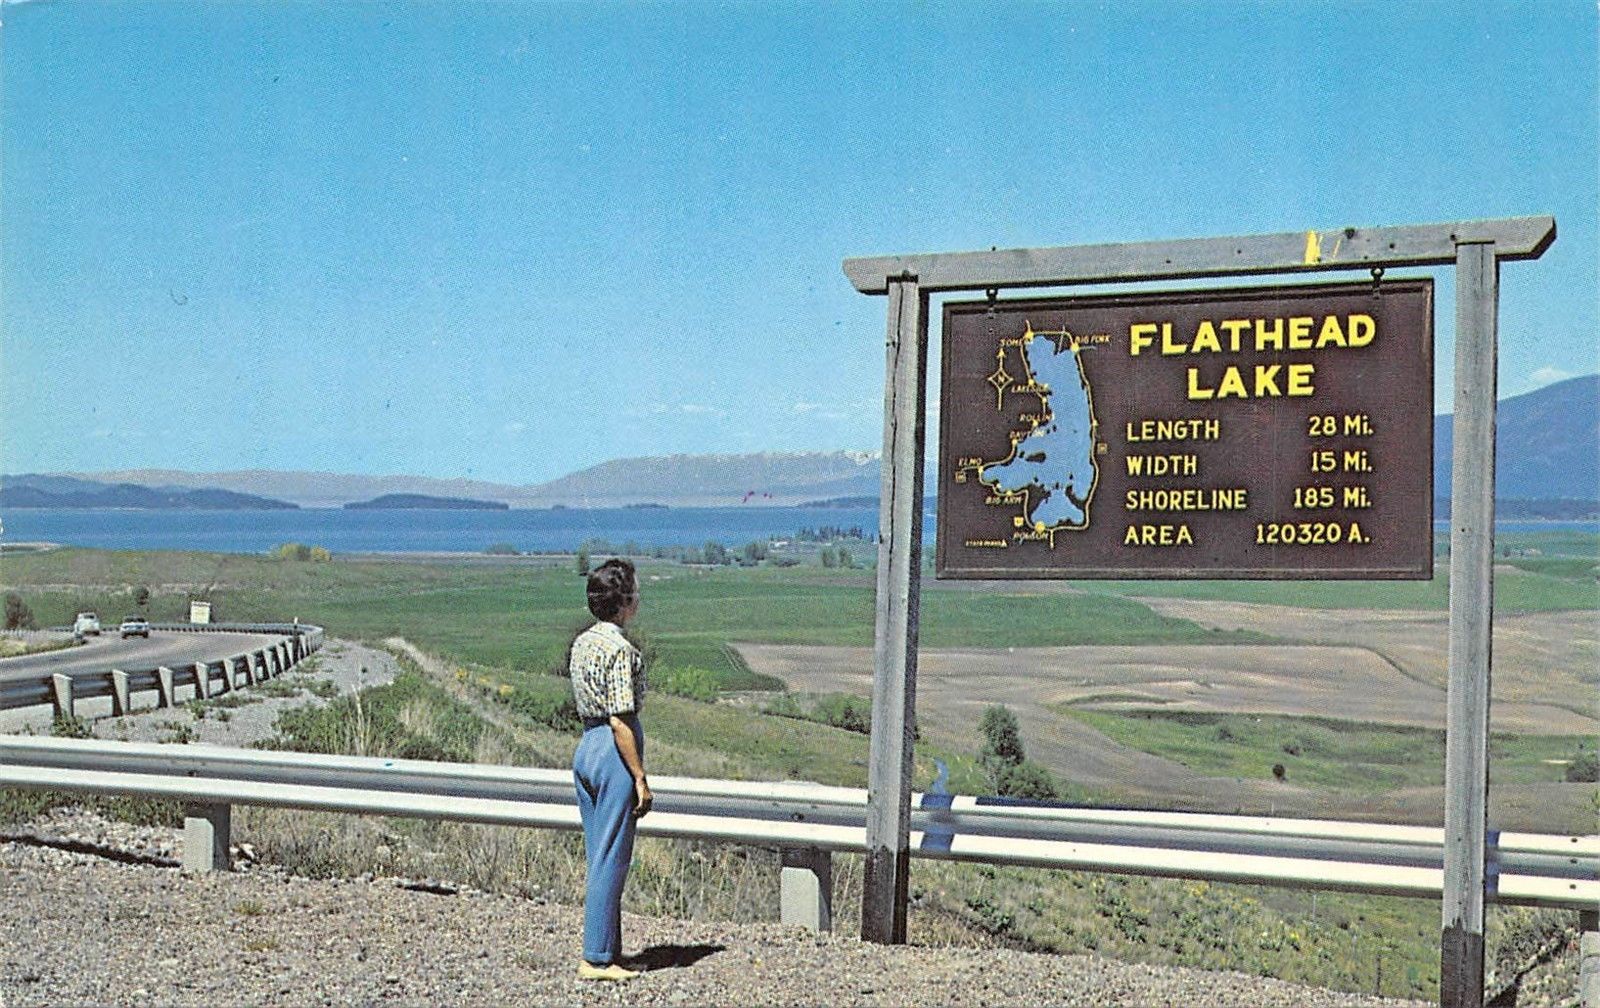 Flathead Lake, Montana.  The start line